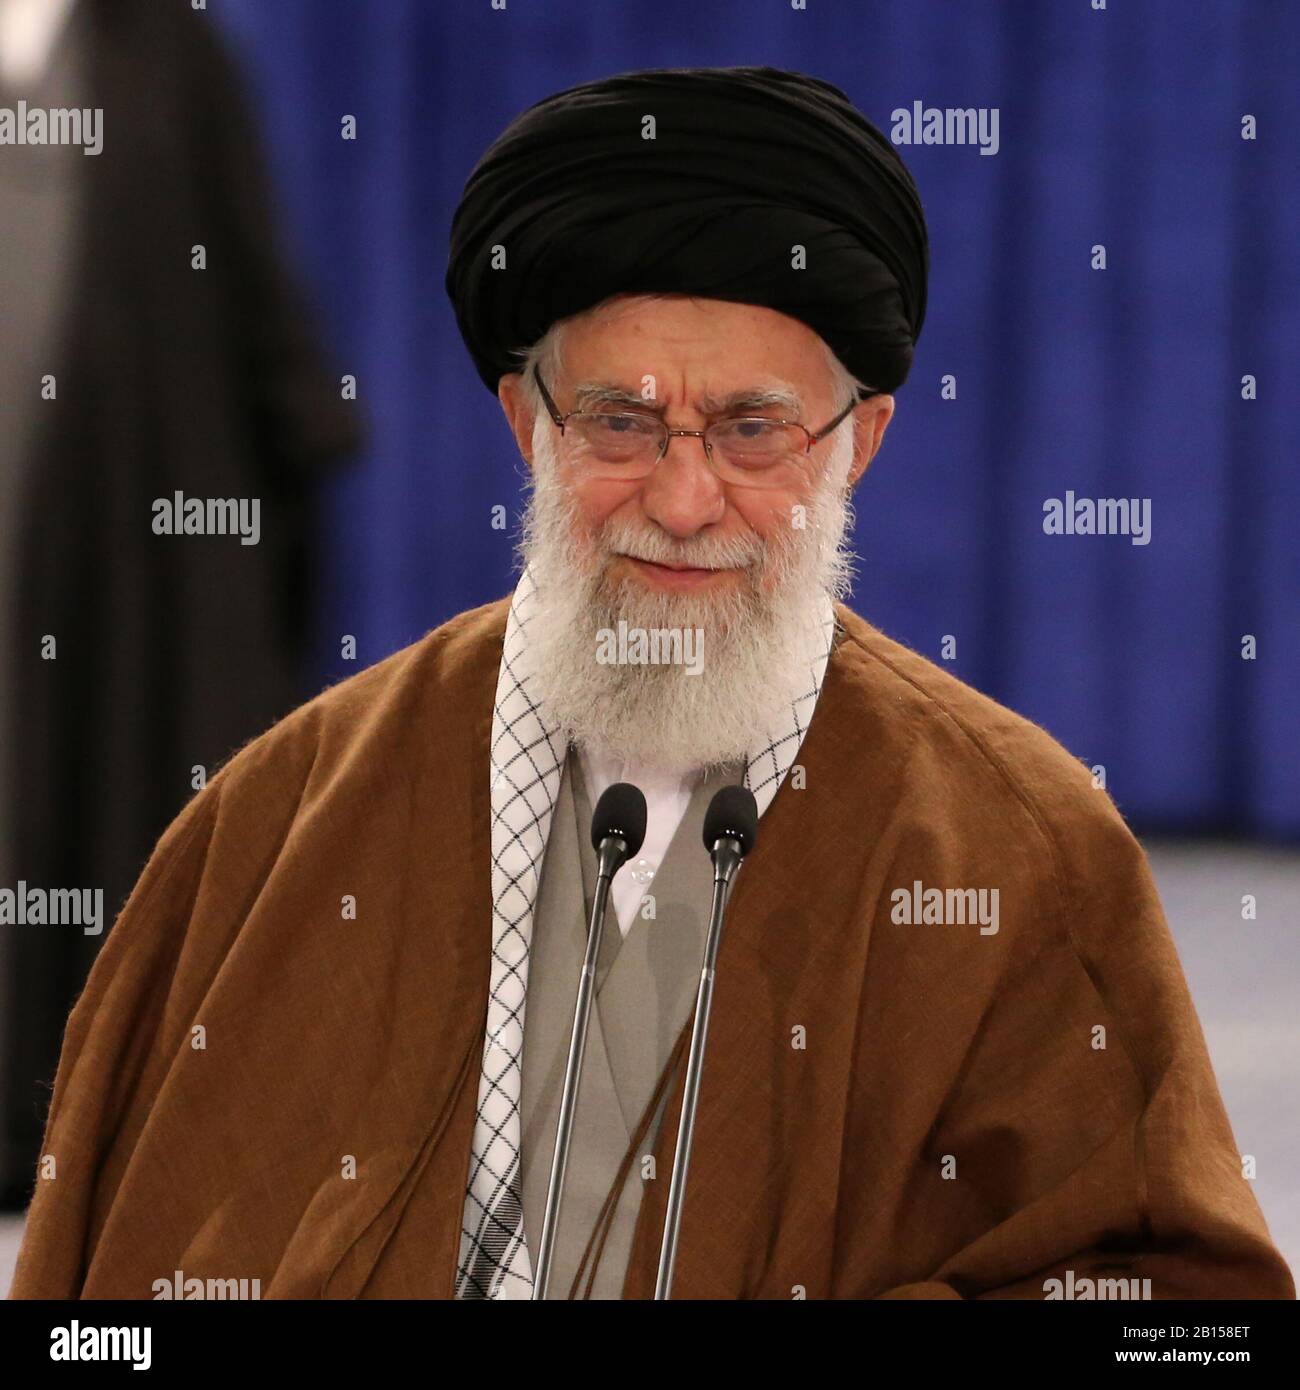 Ayatollah Khamenei (@khamenei.en) • Instagram photos and videos